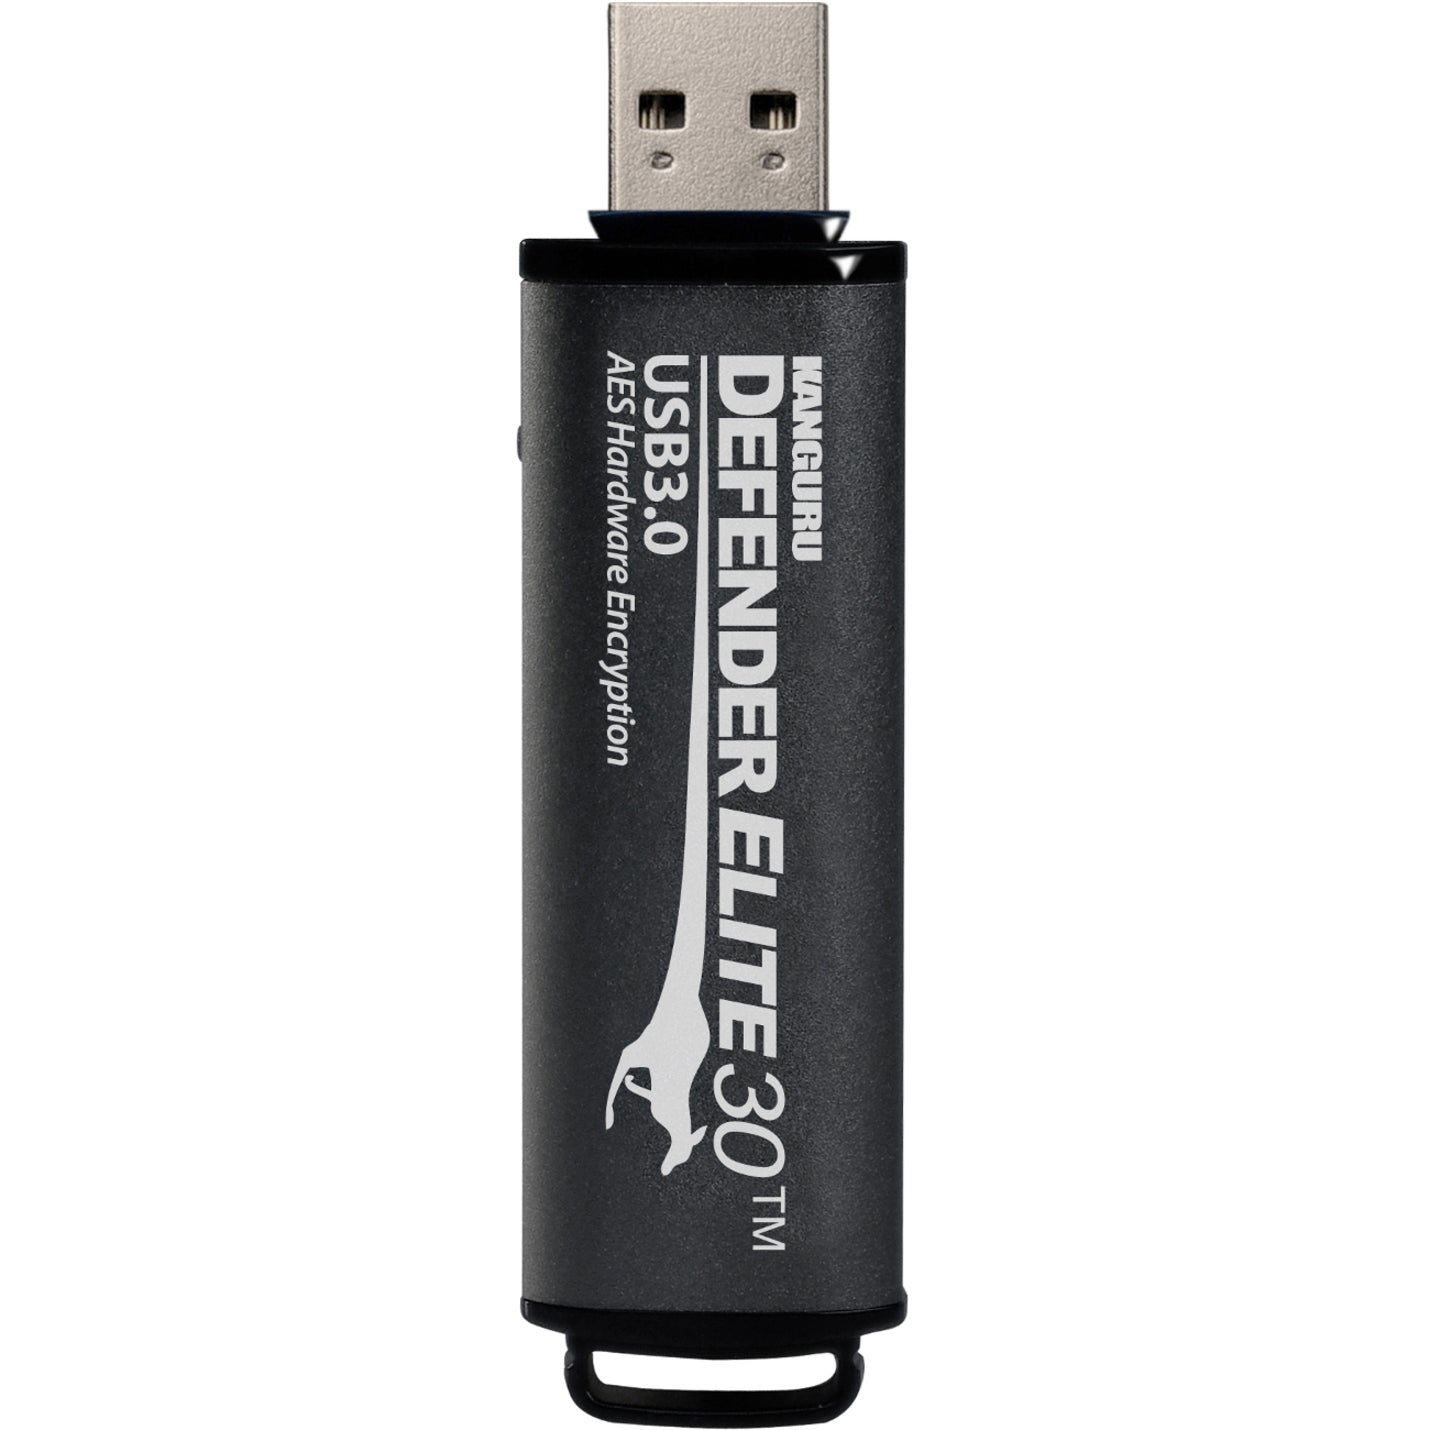 Kanguru Defender Elite30 Hardware Encrypted Secure SuperSpeed USB 3.0 Flash Drive 256G